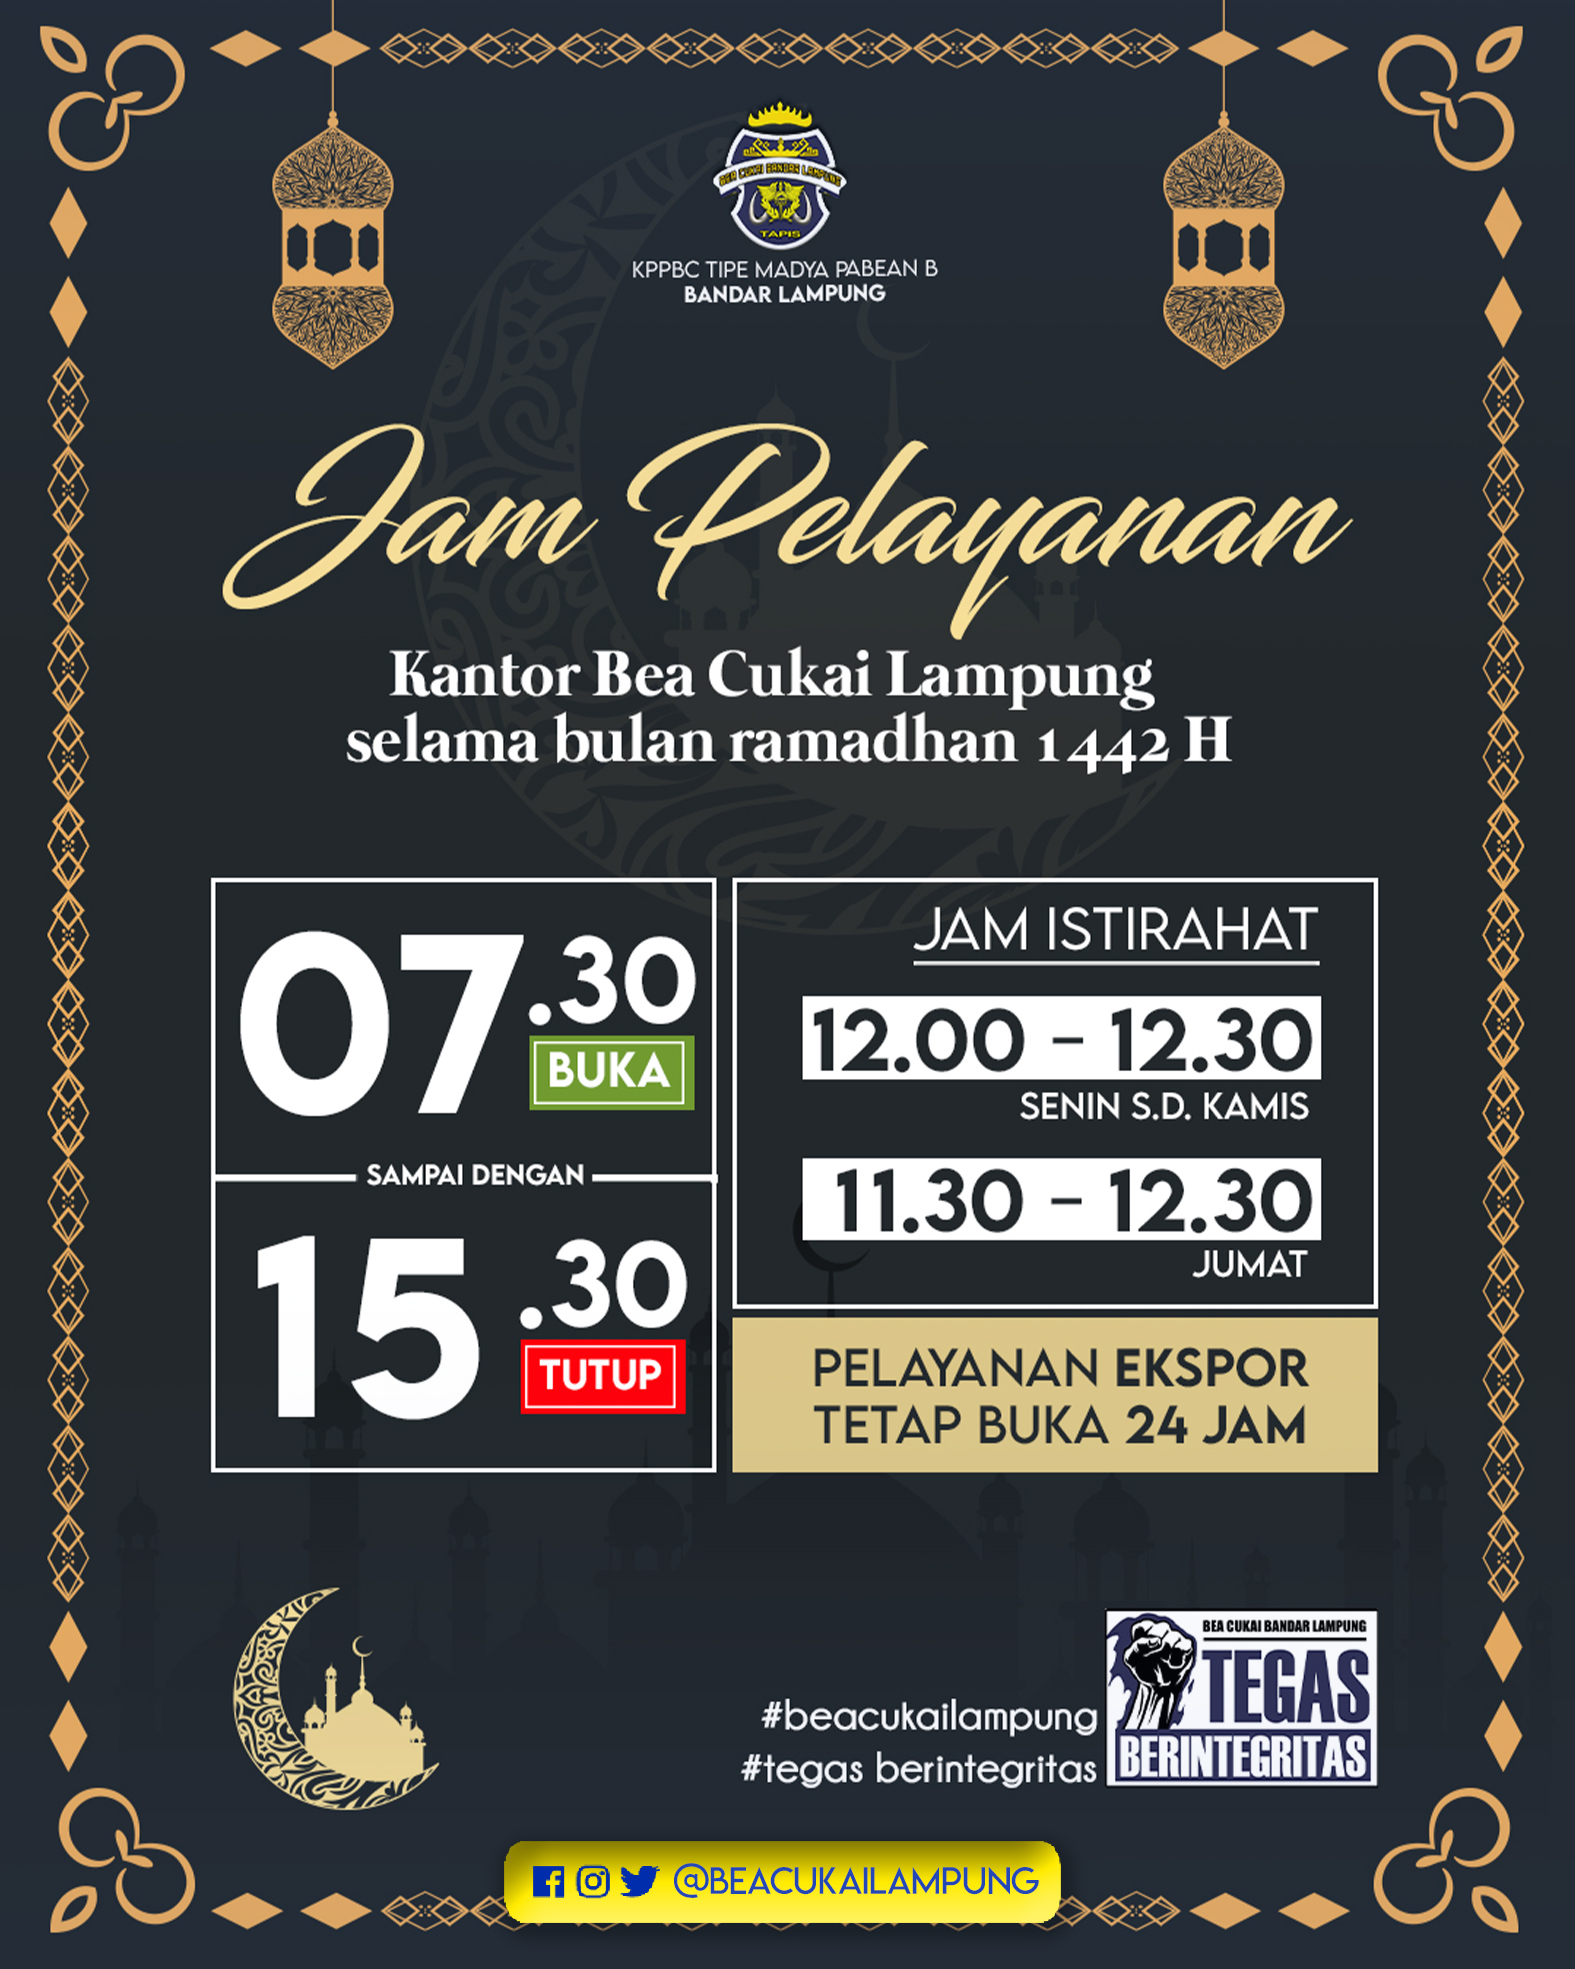 Pelayanan Kantor Bea Cukai Lampung selama Bulan Ramadhan 1442 Hijriyah